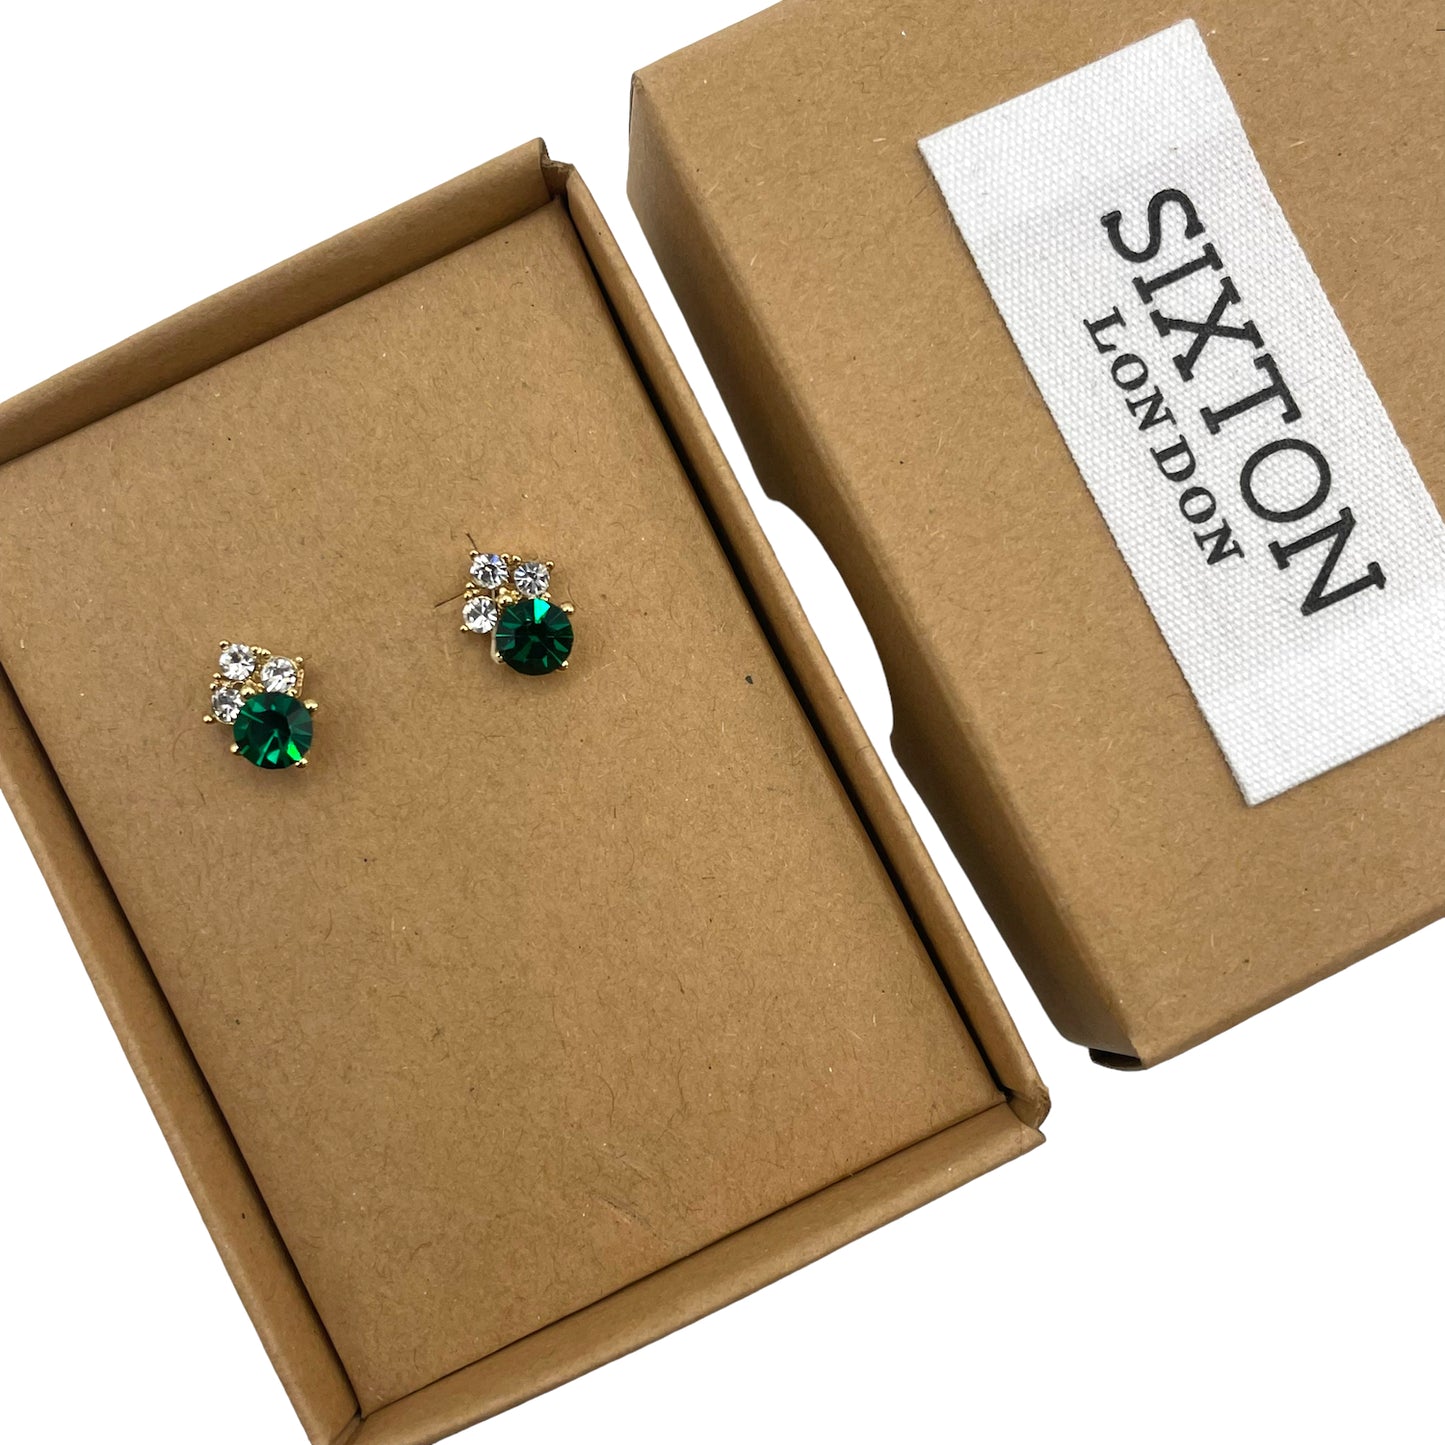 Vintage style emerald stud earrings